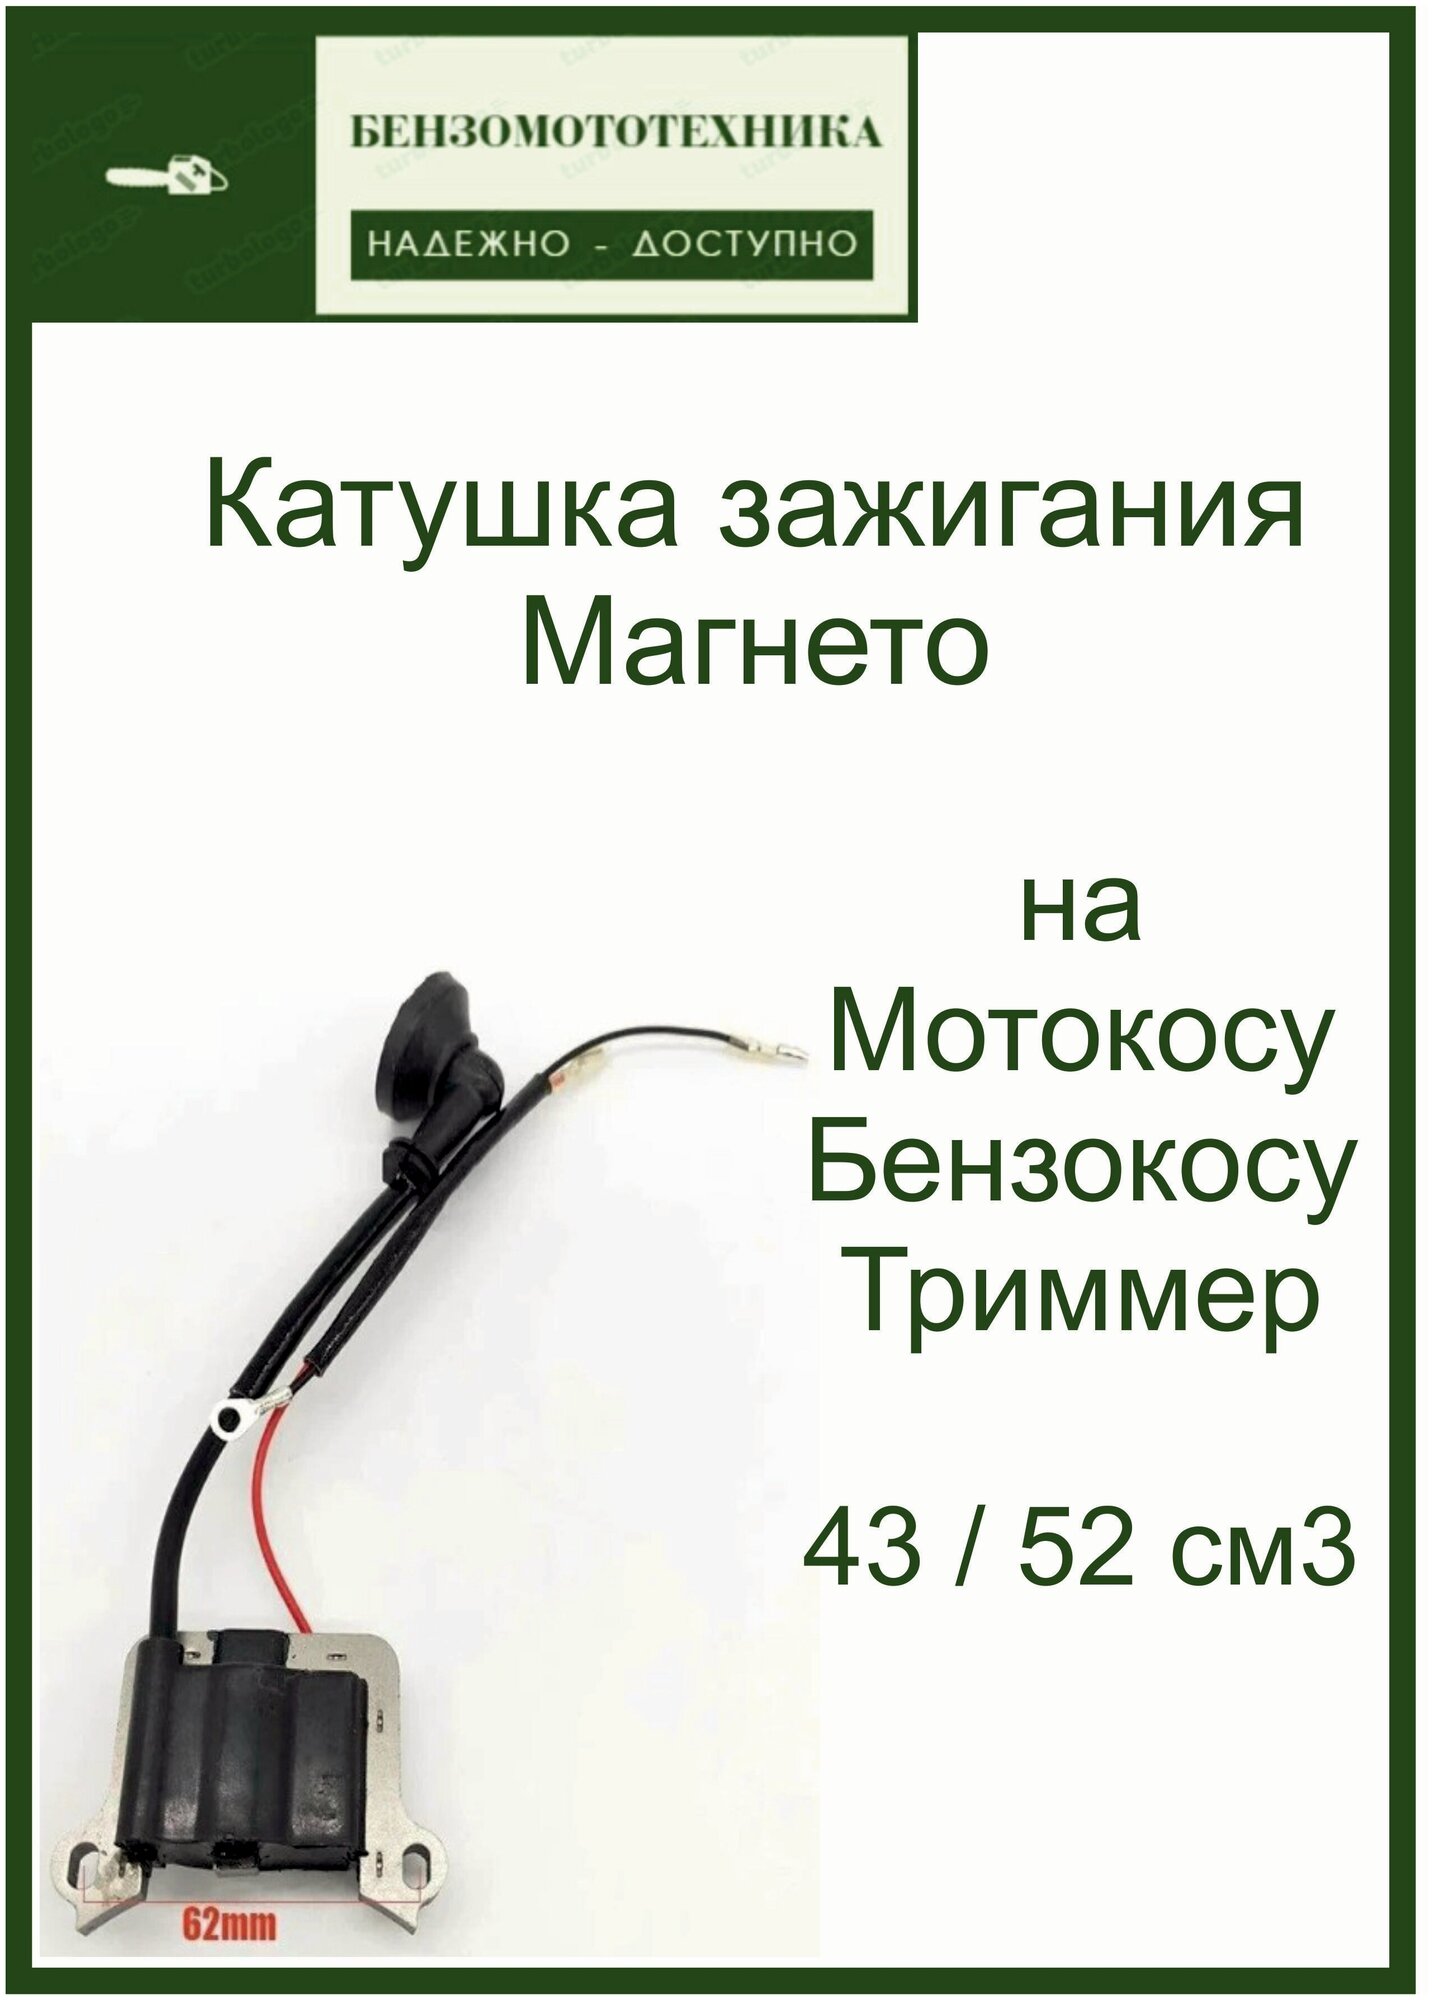 Катушка зажигания магнето на триммер мотокосу бензокосу 43 / 52 см3